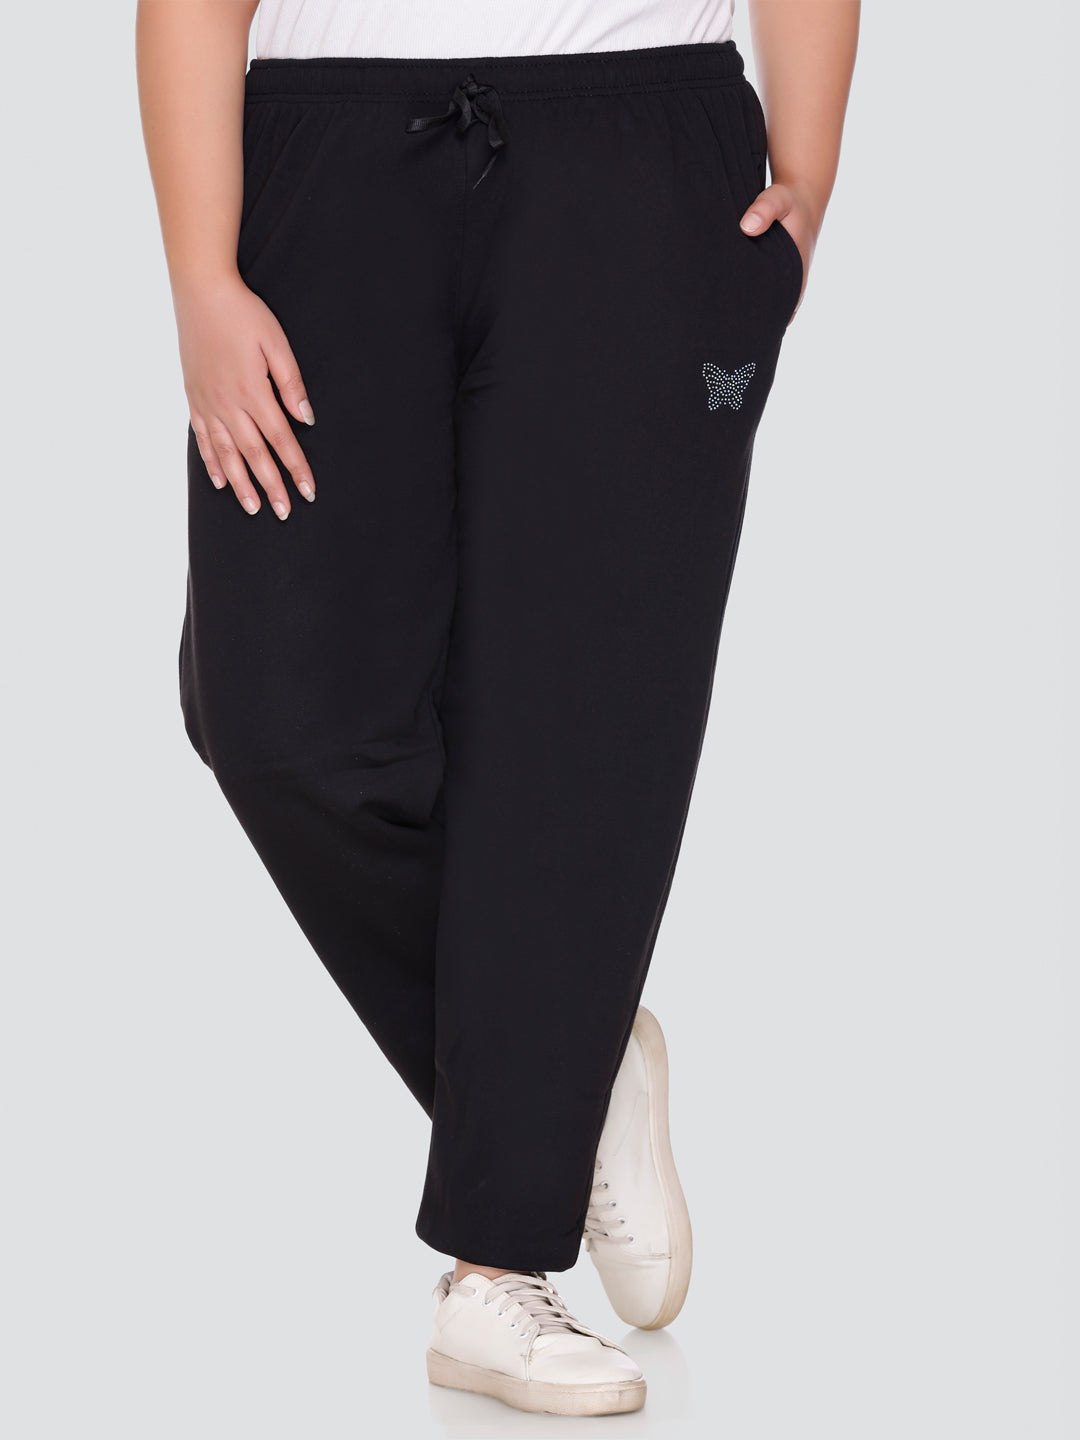 Khaki Dress Pants for Women Wide Leg High Waist Cropped Pants - Walmart.com